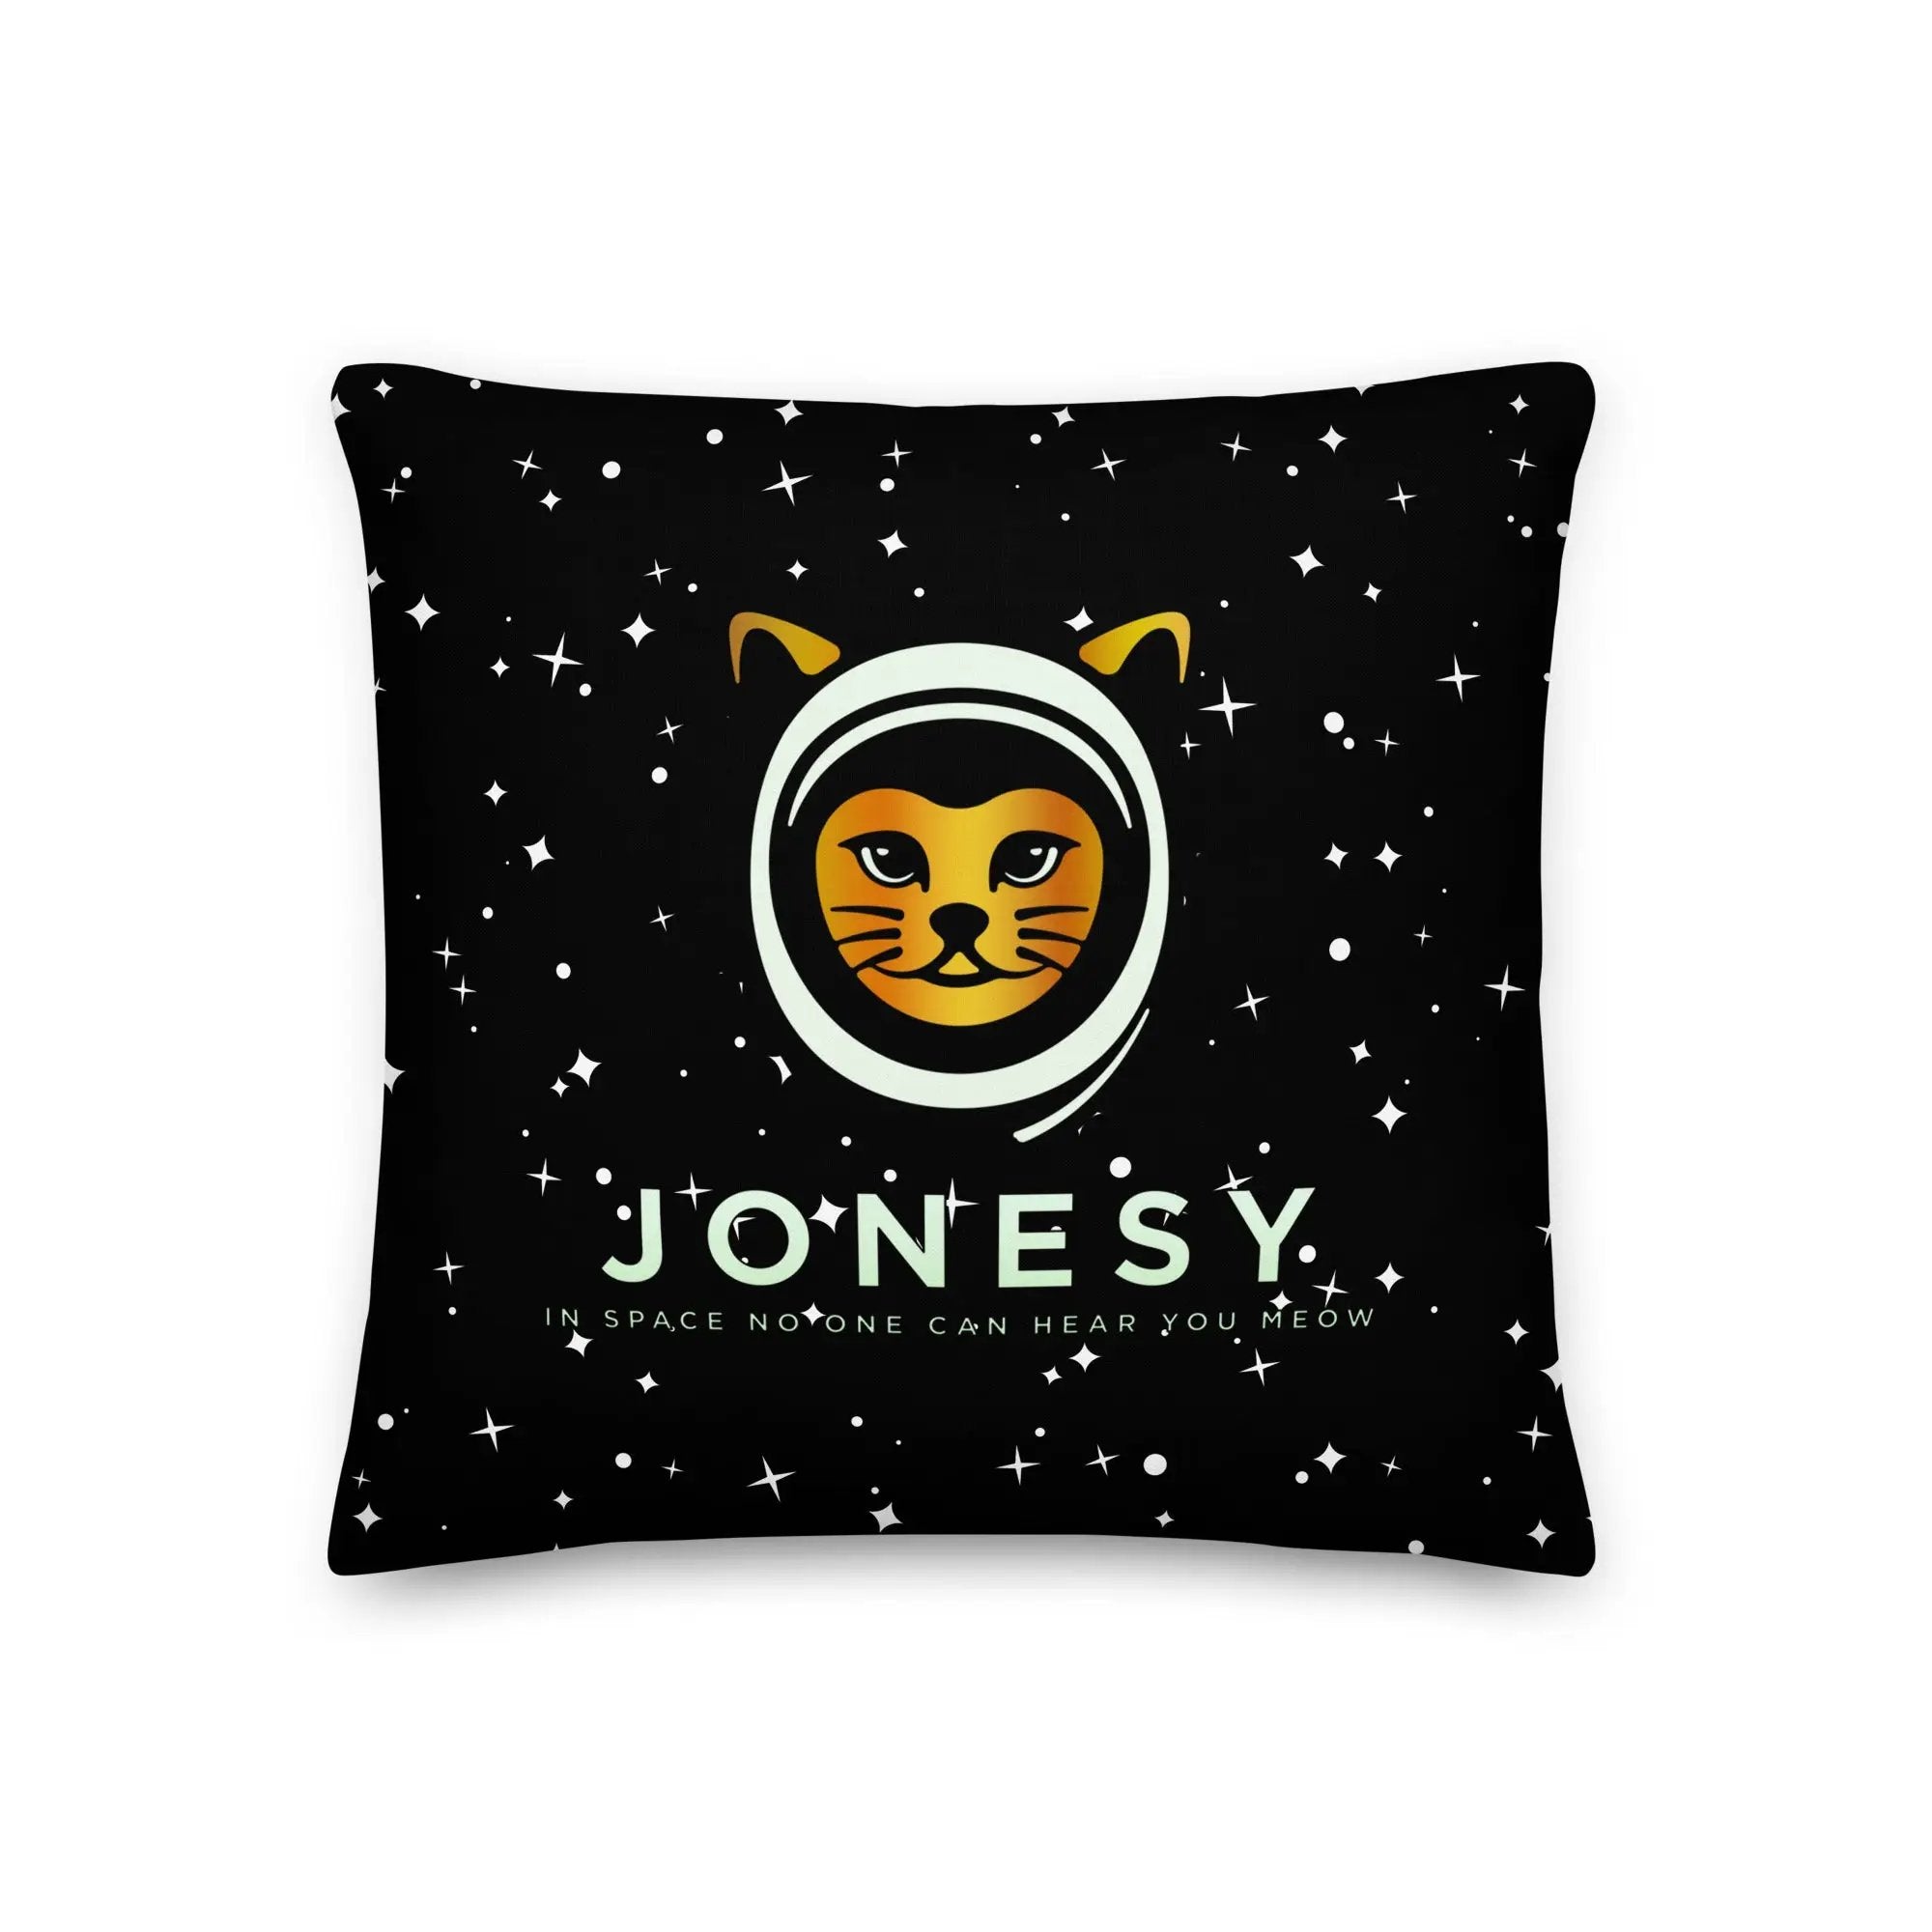 Jonesy Premium Pillow